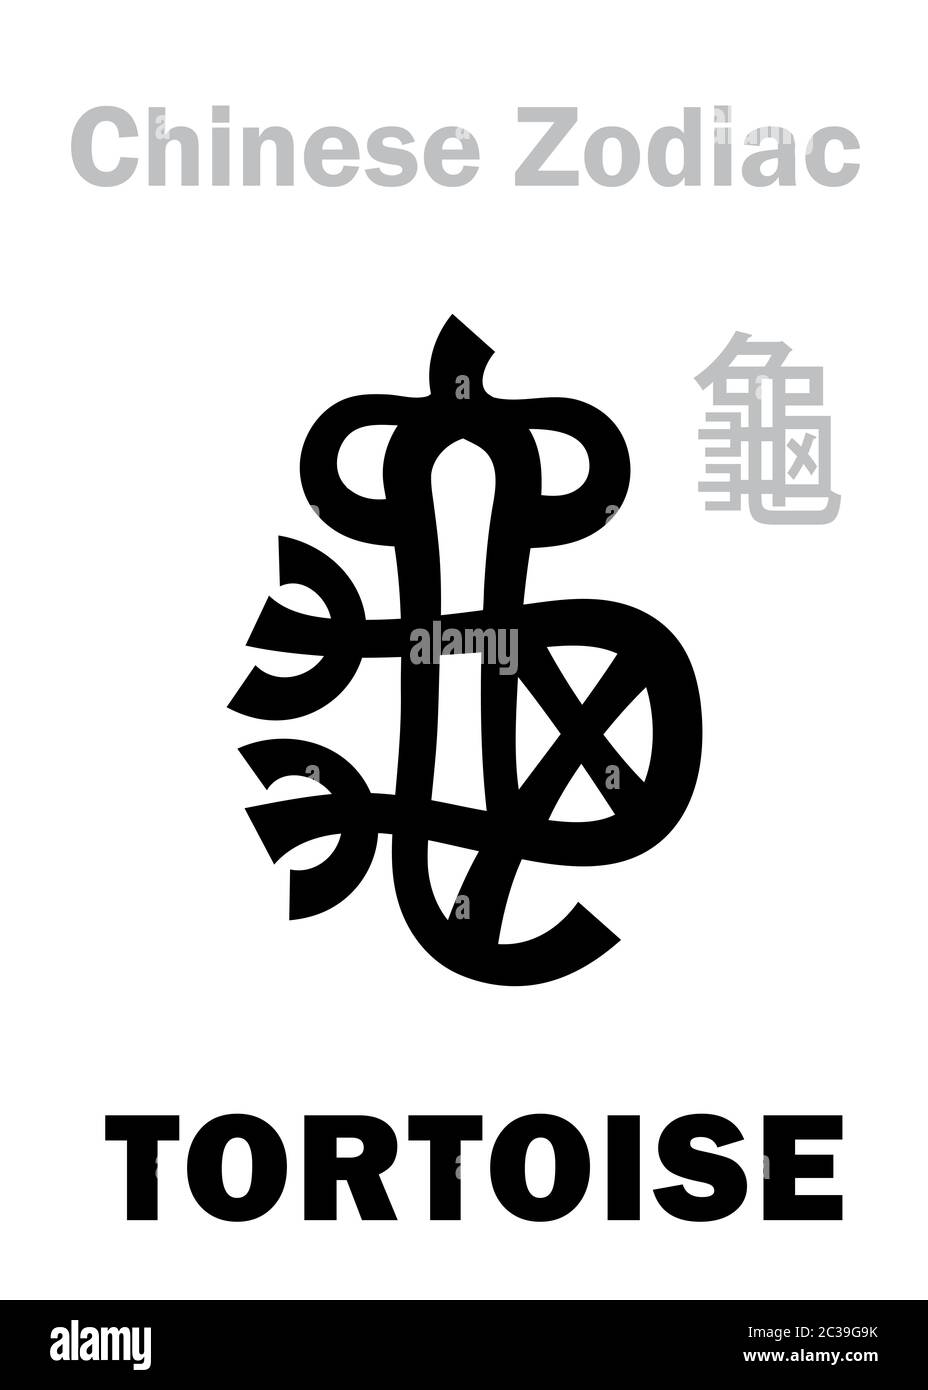 Astrology: TORTOISE (sign of Chinese Zodiac) Stock Photo